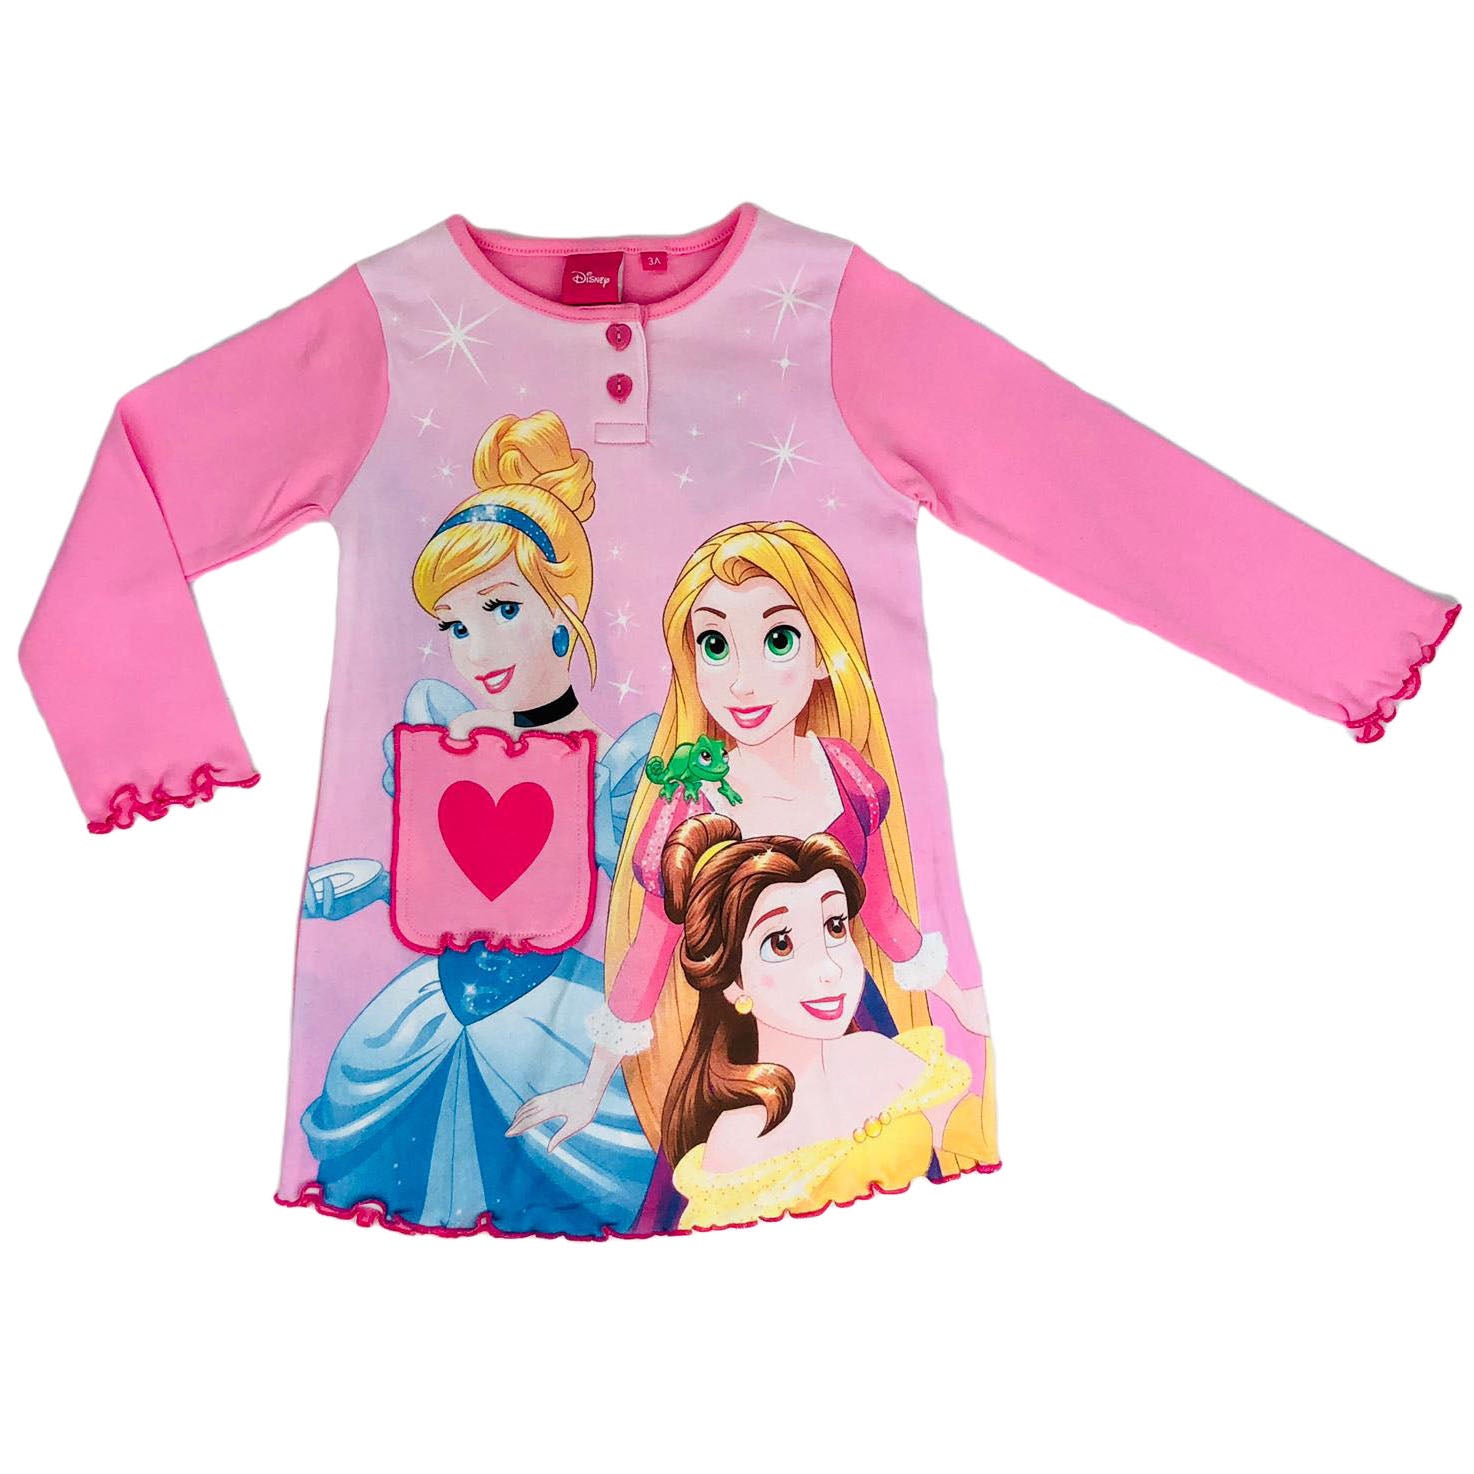 Maglietta maniche lunghe bambina ufficiale Disney principesse originale 1252